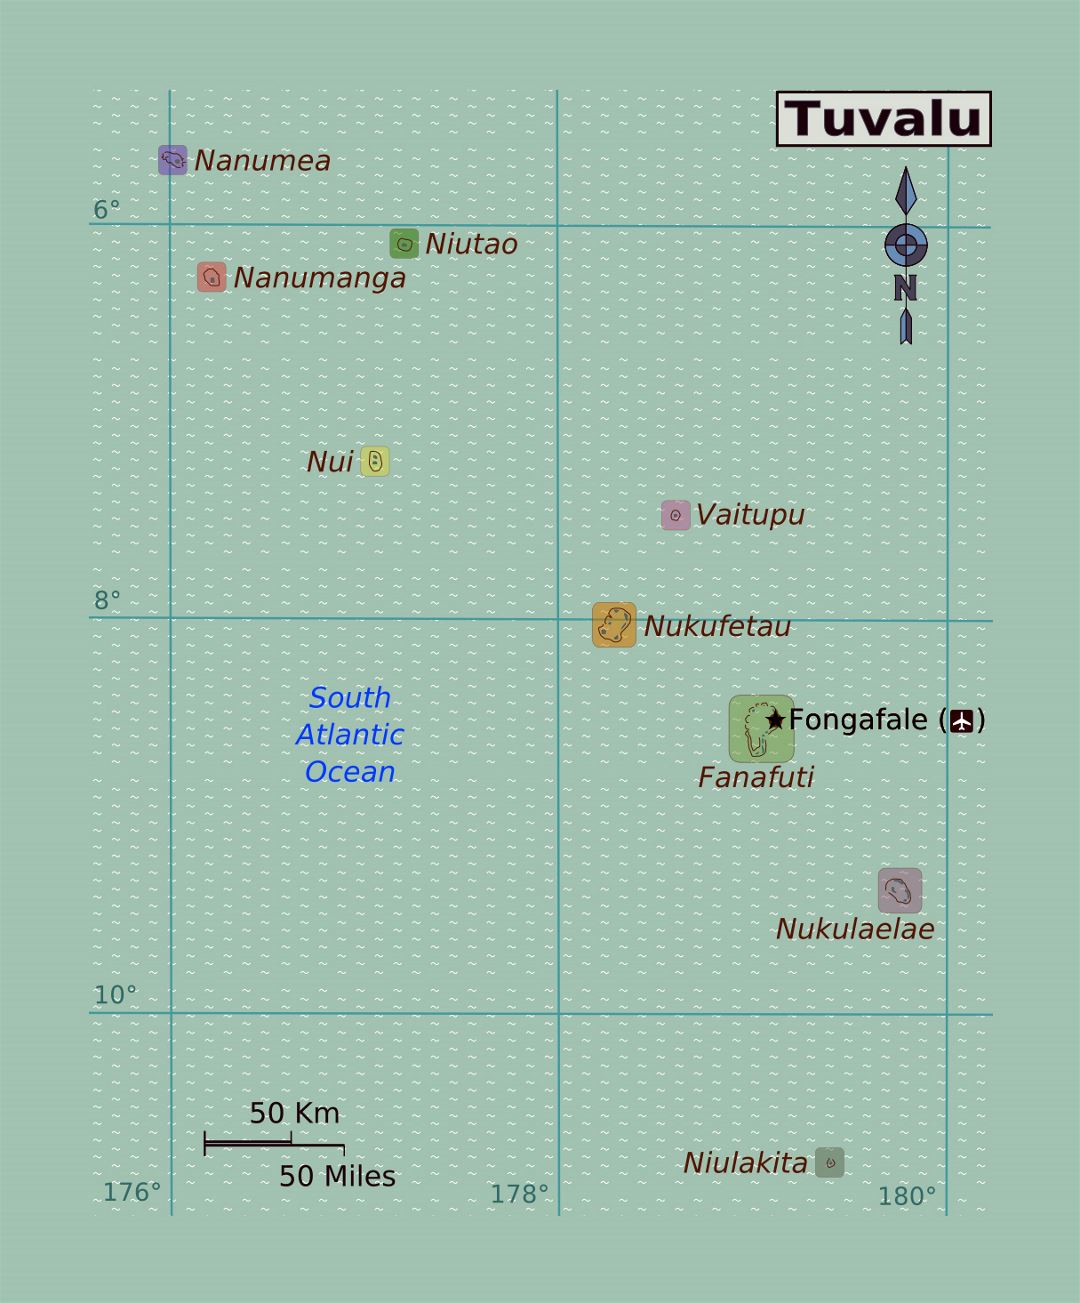 Detailed regions map of Tuvalu